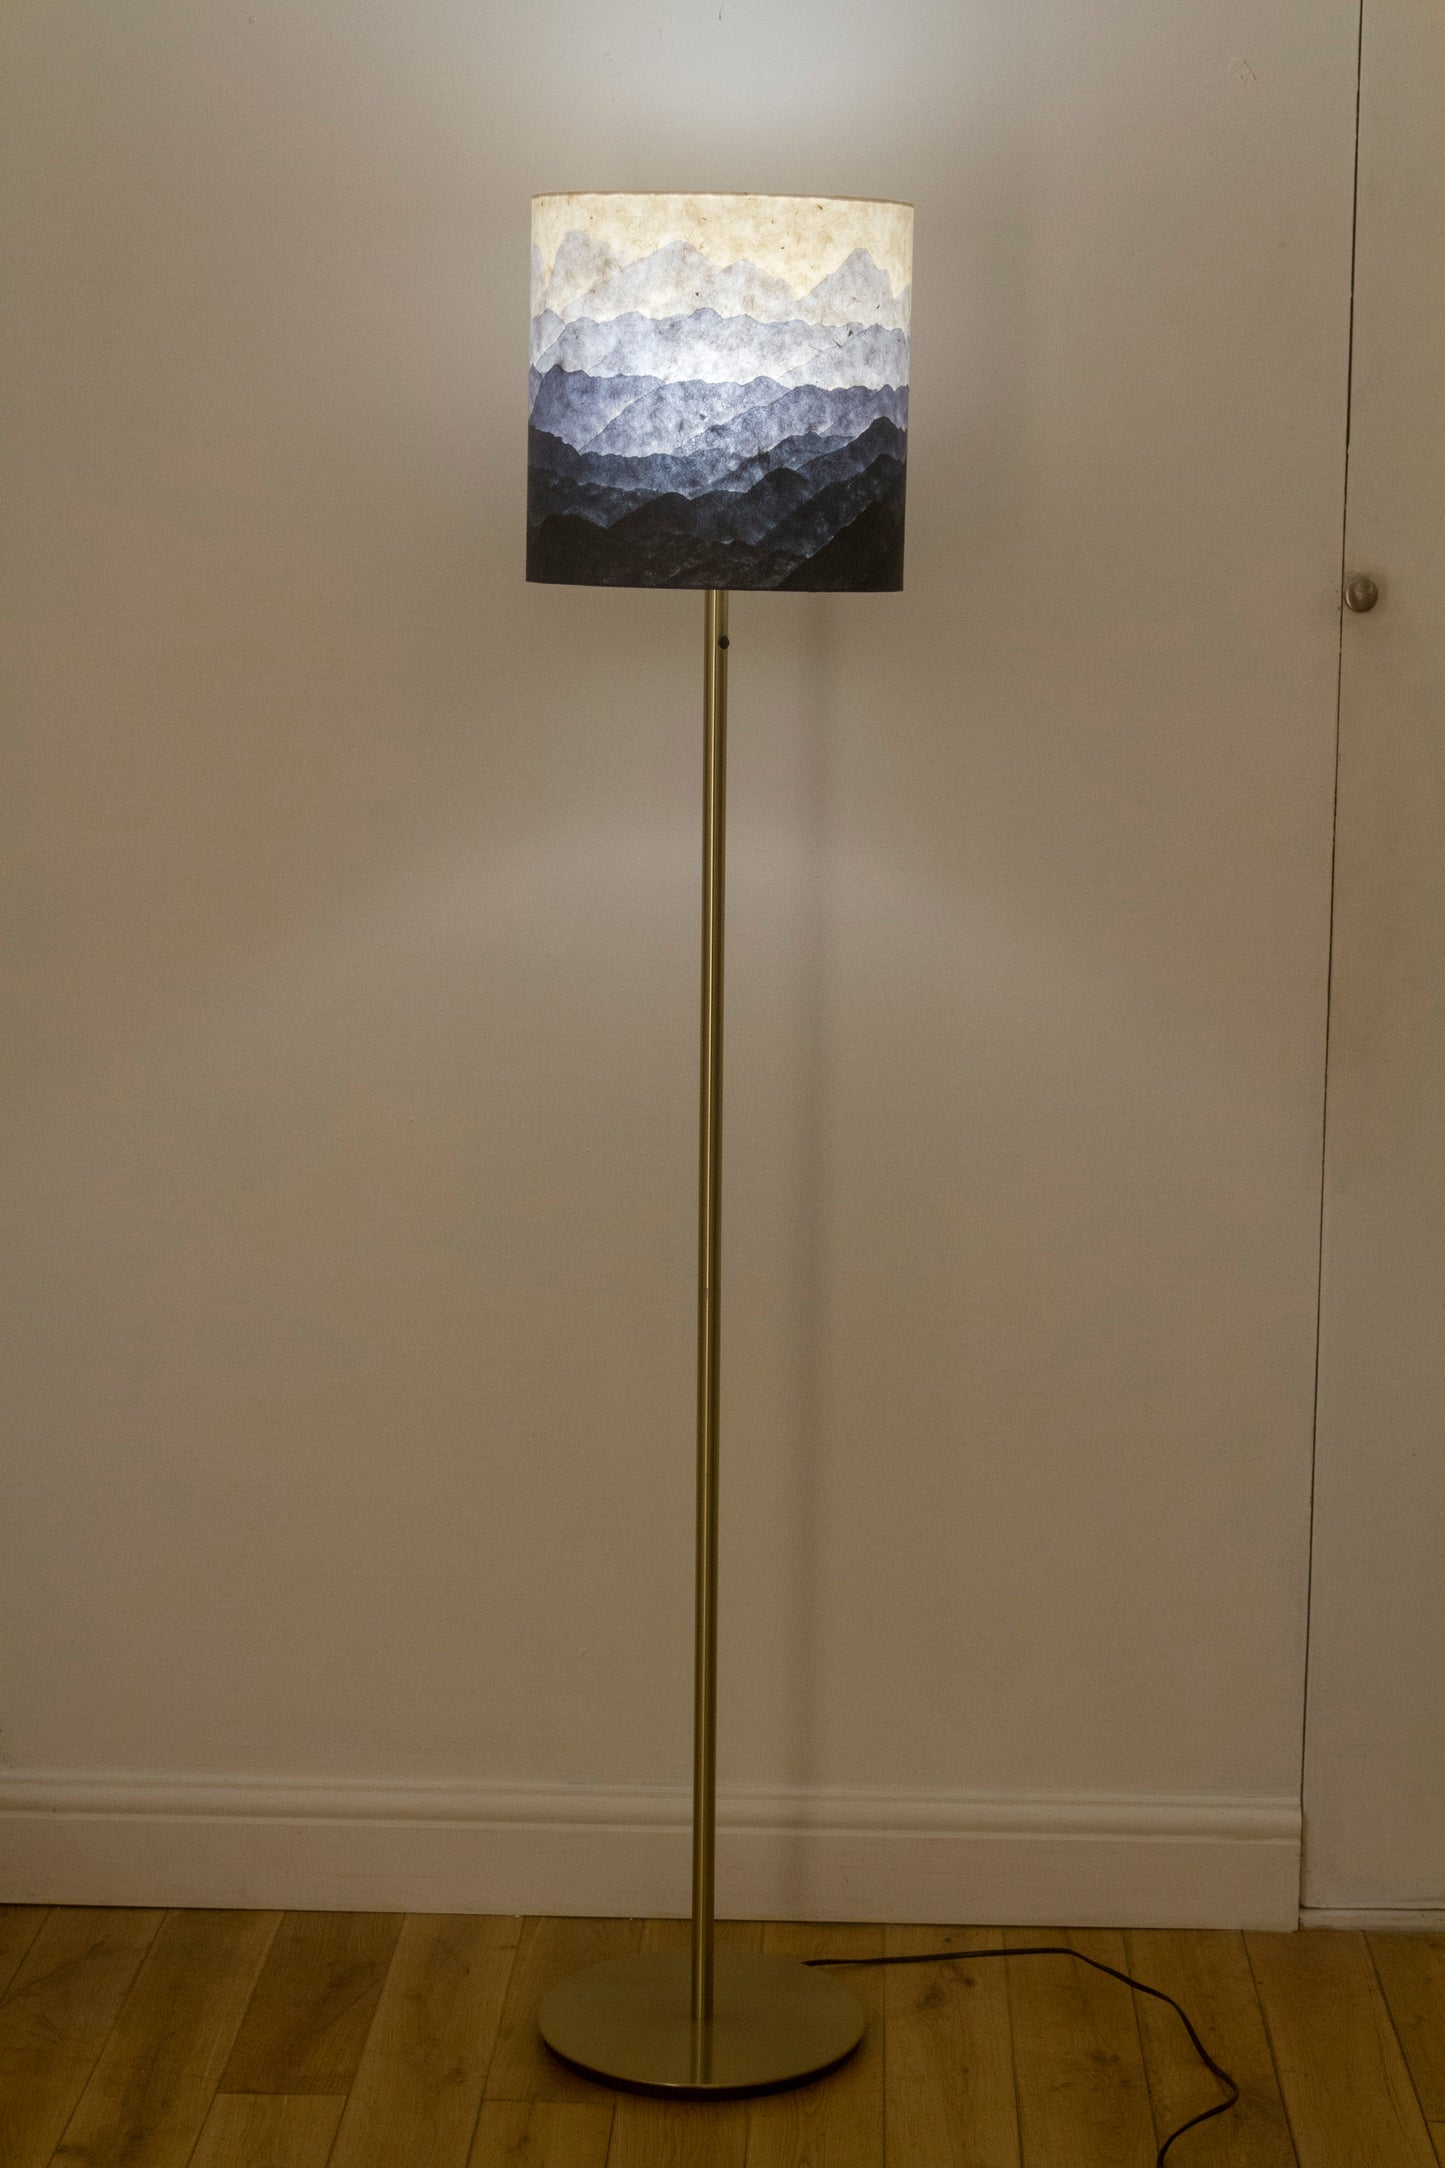 Original Ink Sketch Lamp Shade on a Brass Effect Floor Lamp